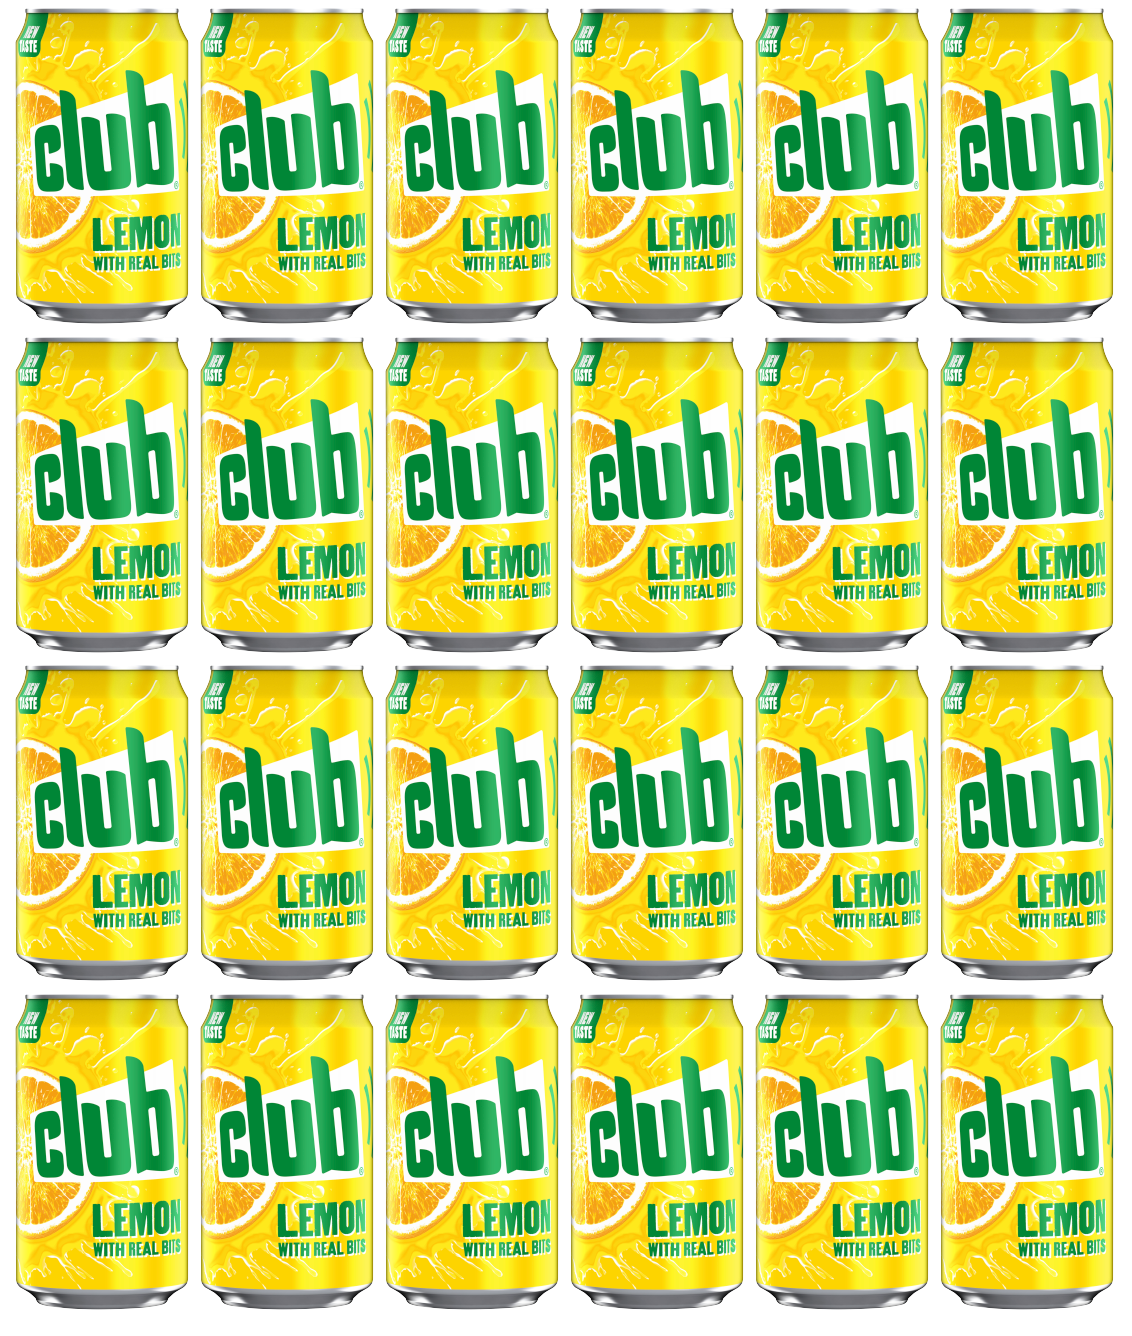 24 X Club Lemon Cans 330ML